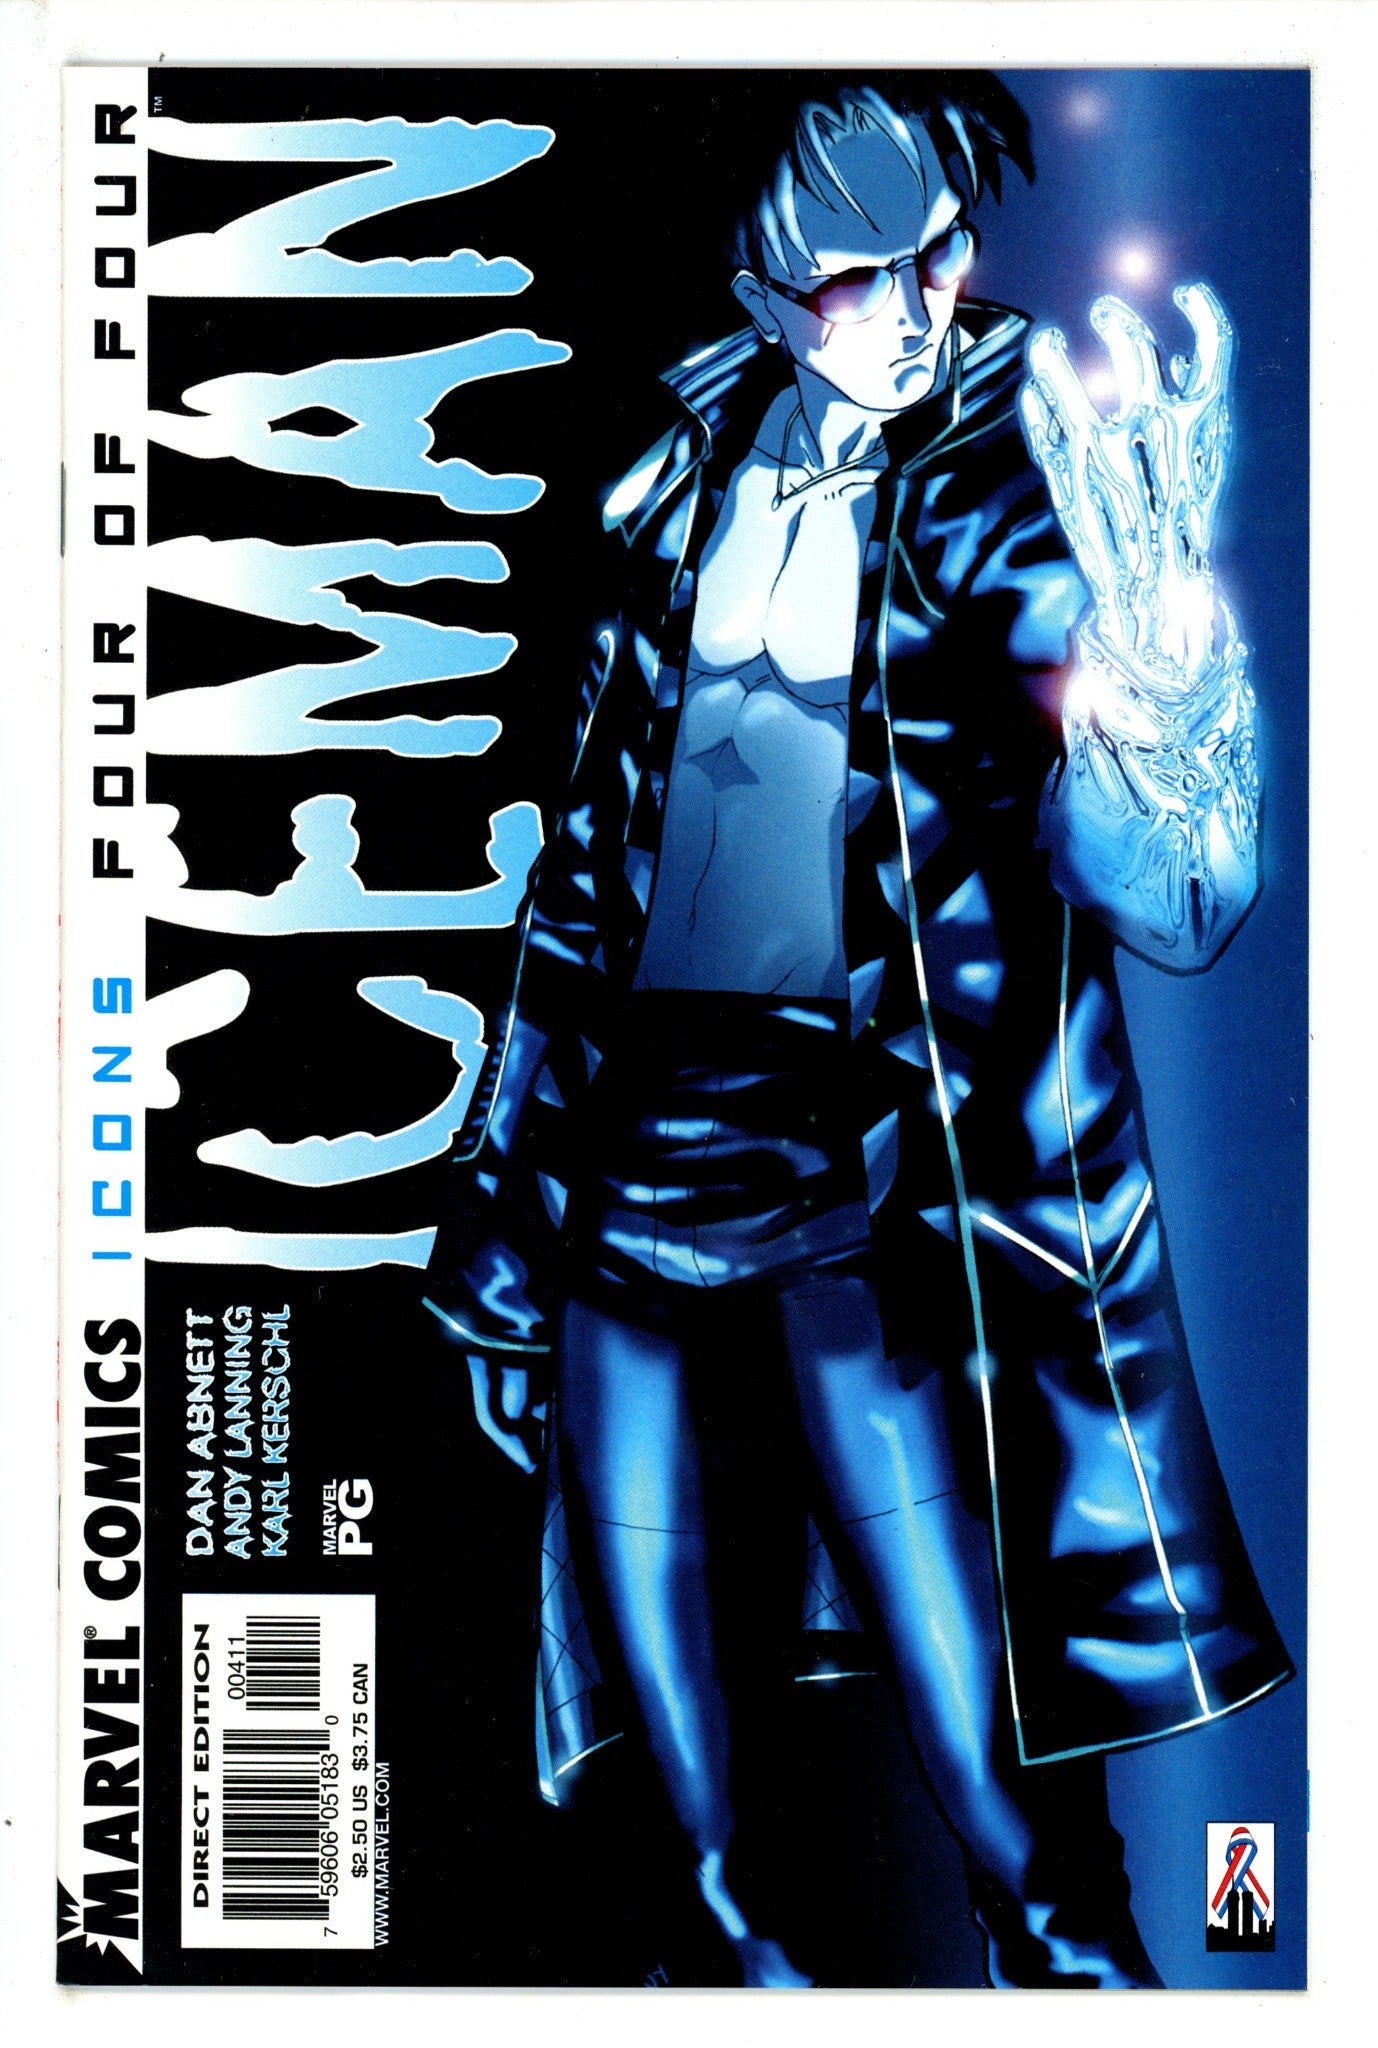 Iceman Vol 2 4 (2001)